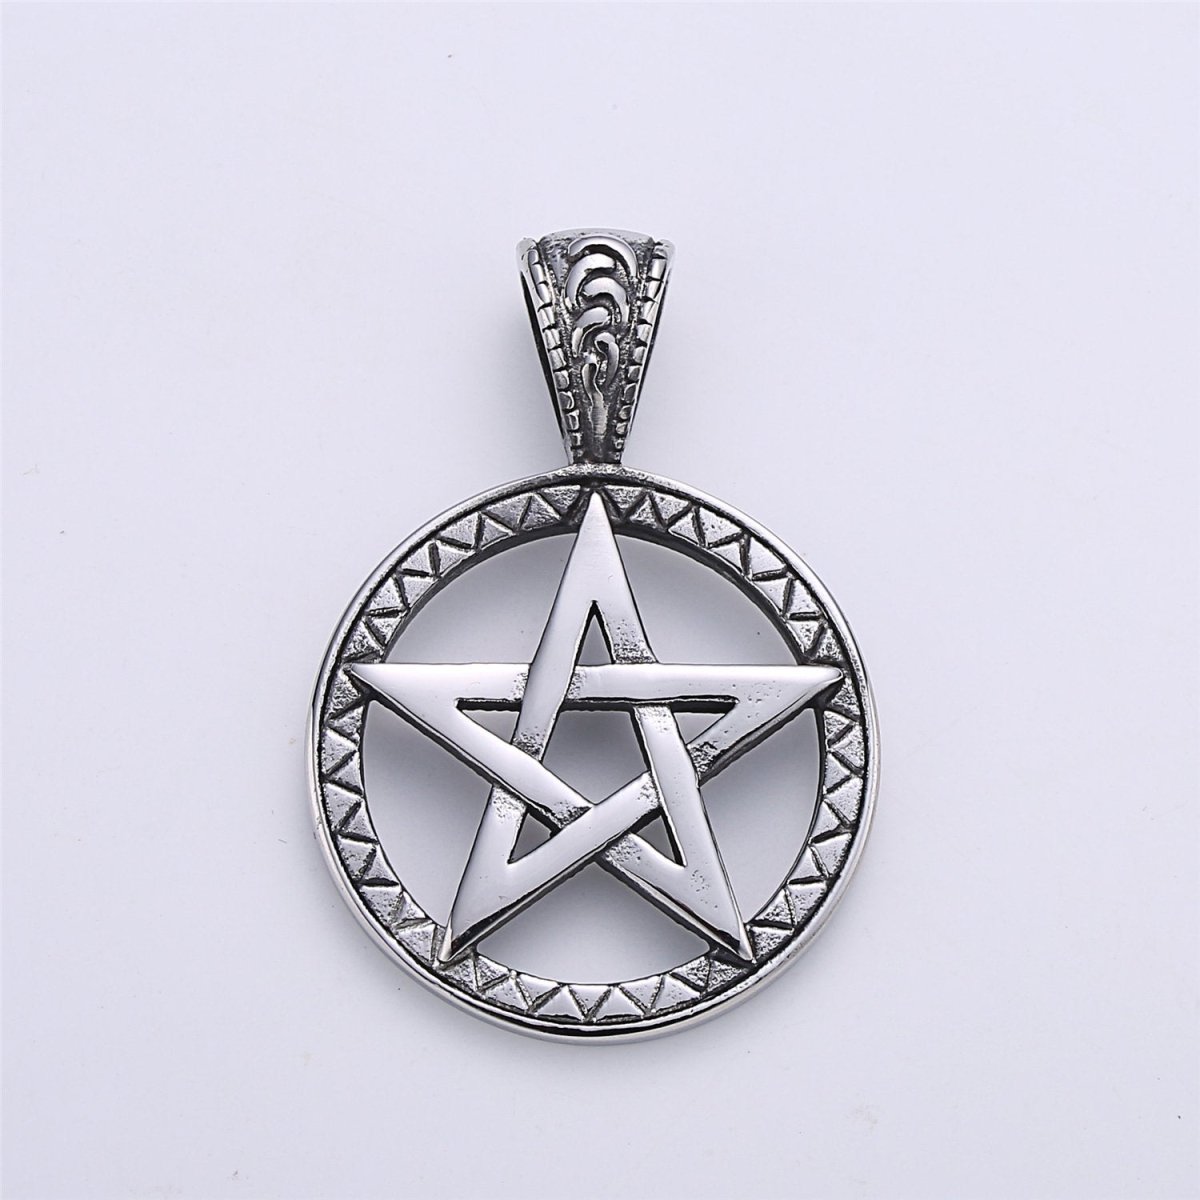 Antique Silver Star Pentacle - Wicca Jewelry Vintage Pendant - Medallion Pentagram Pendant Necklace Component J-702 - DLUXCA